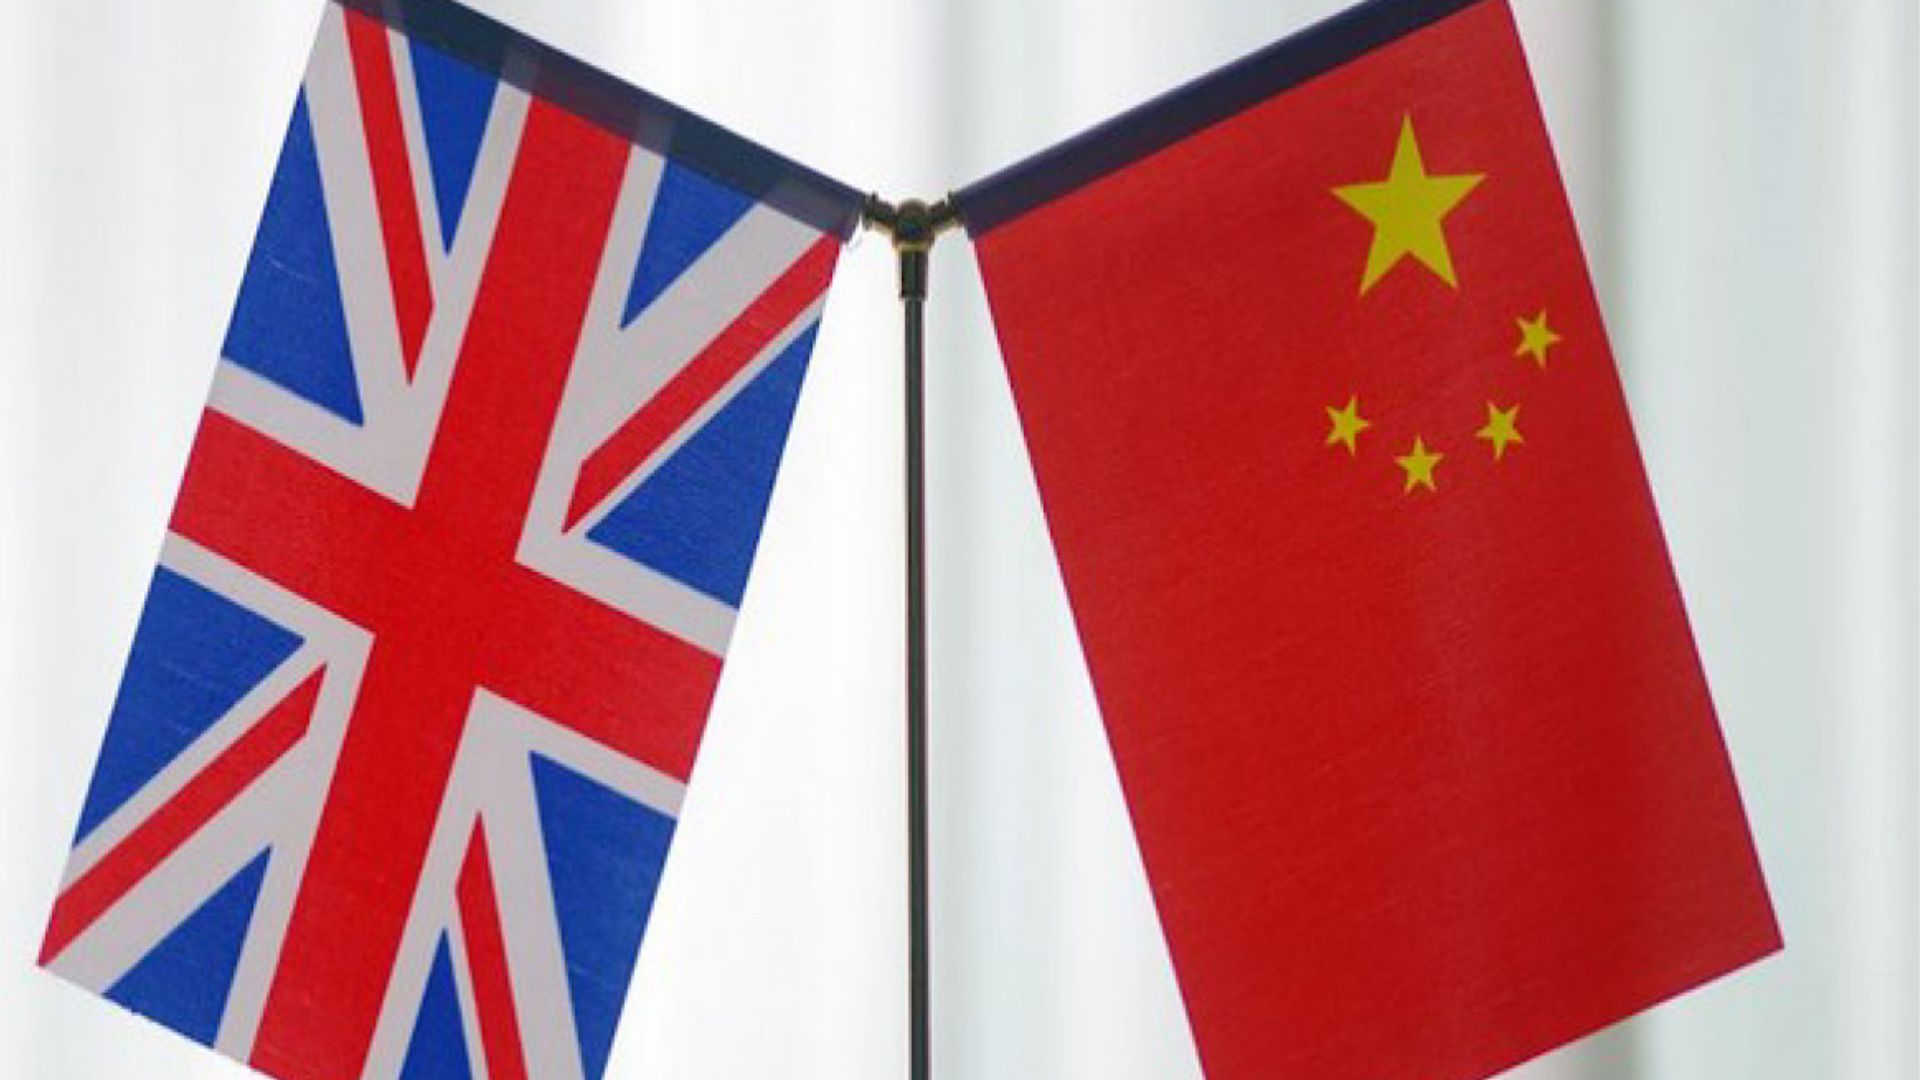 China detains UK’s MI6 spy for gathering intelligence, identifying potential assets